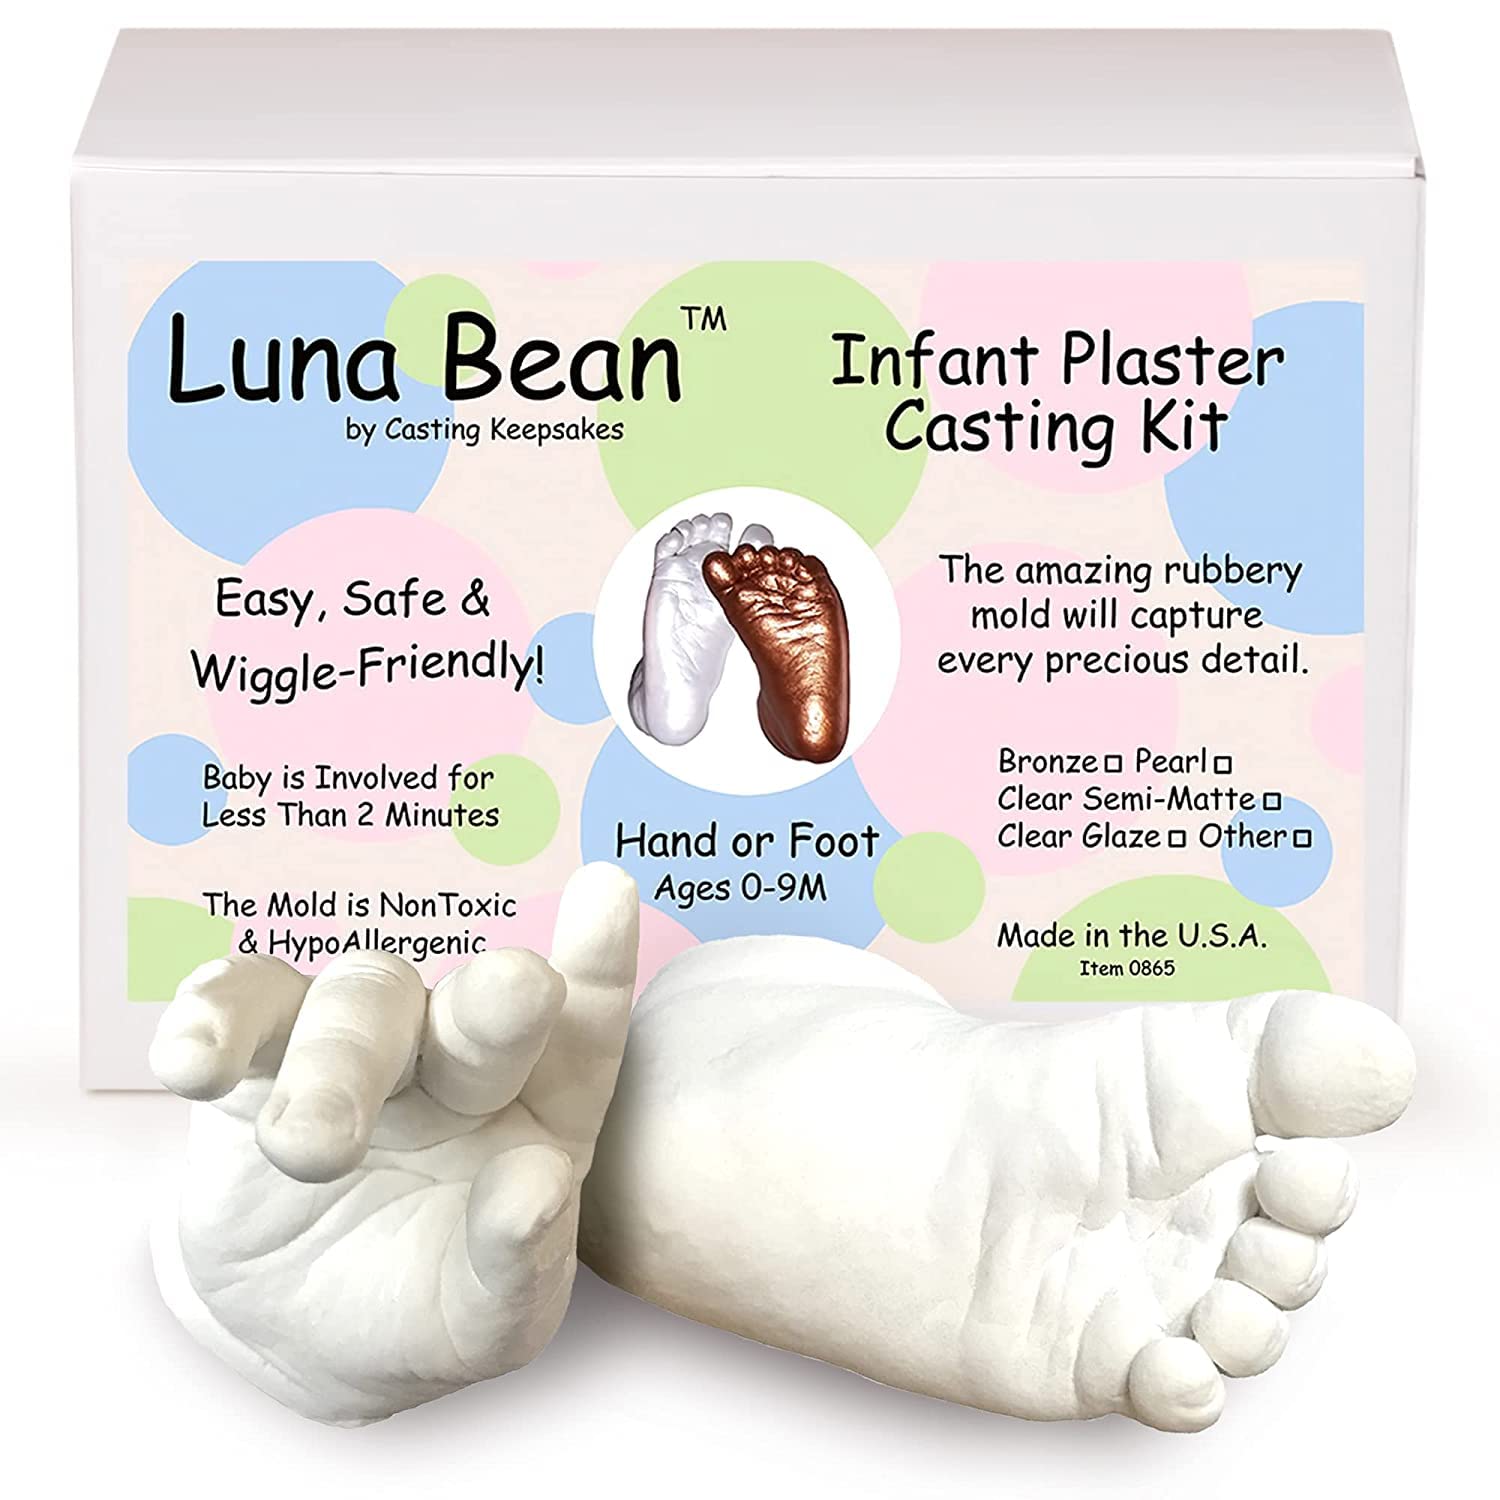 Baby Casting Kit: Luna Bean Deluxe Baby Casting Kit – Luna Bean